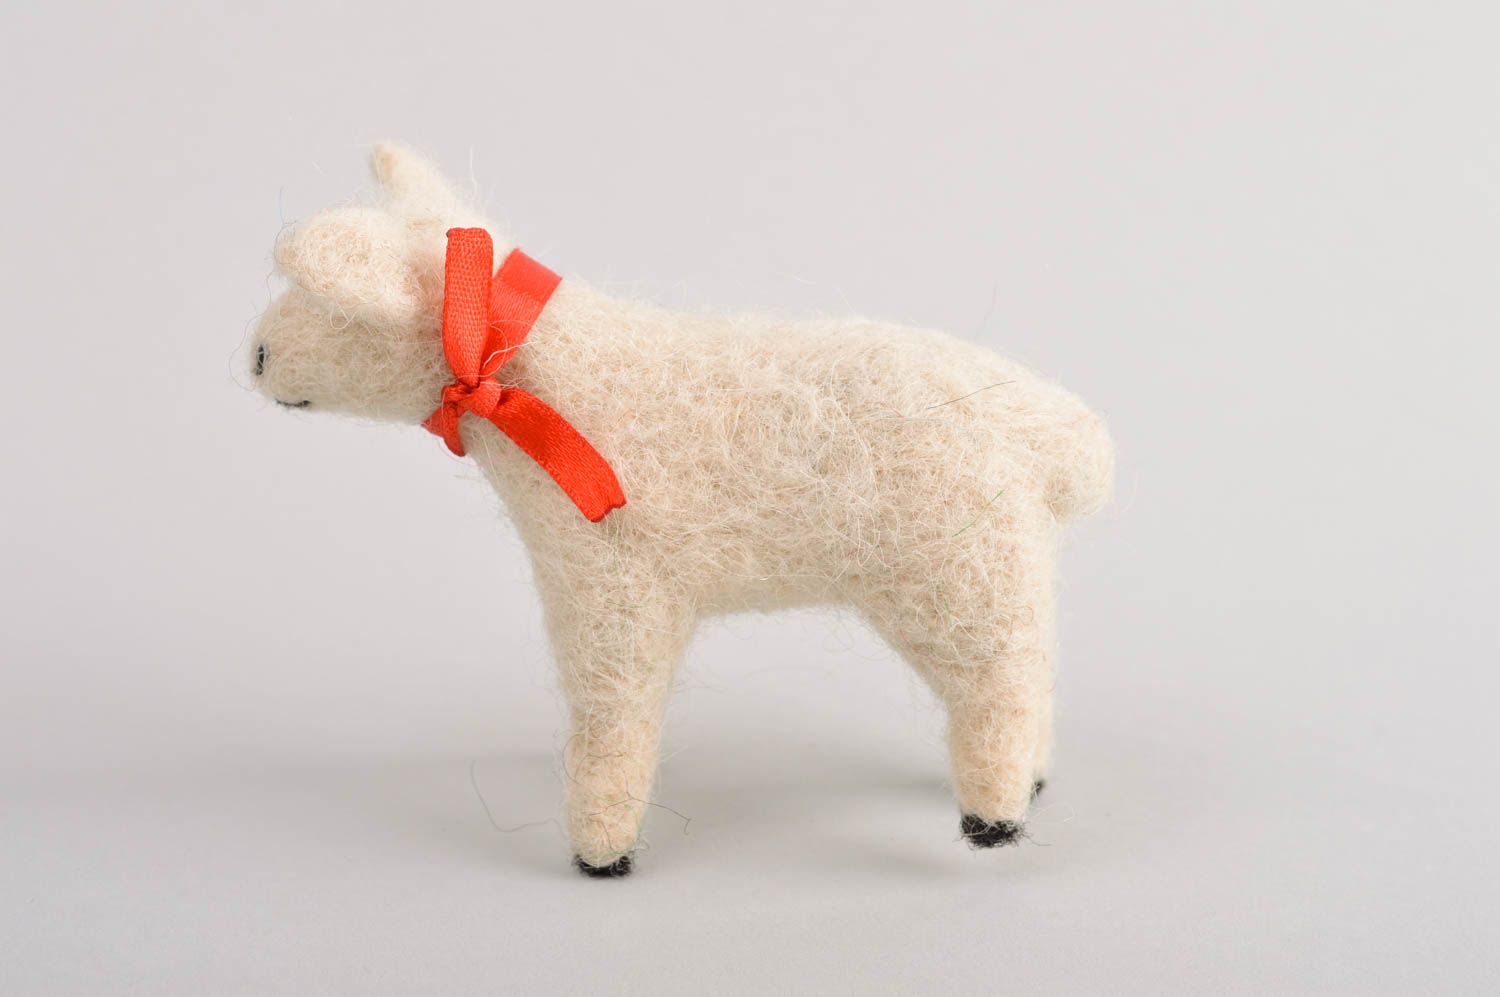 Handmade toy woolen toy for children interior decor ideas gift for baby photo 3